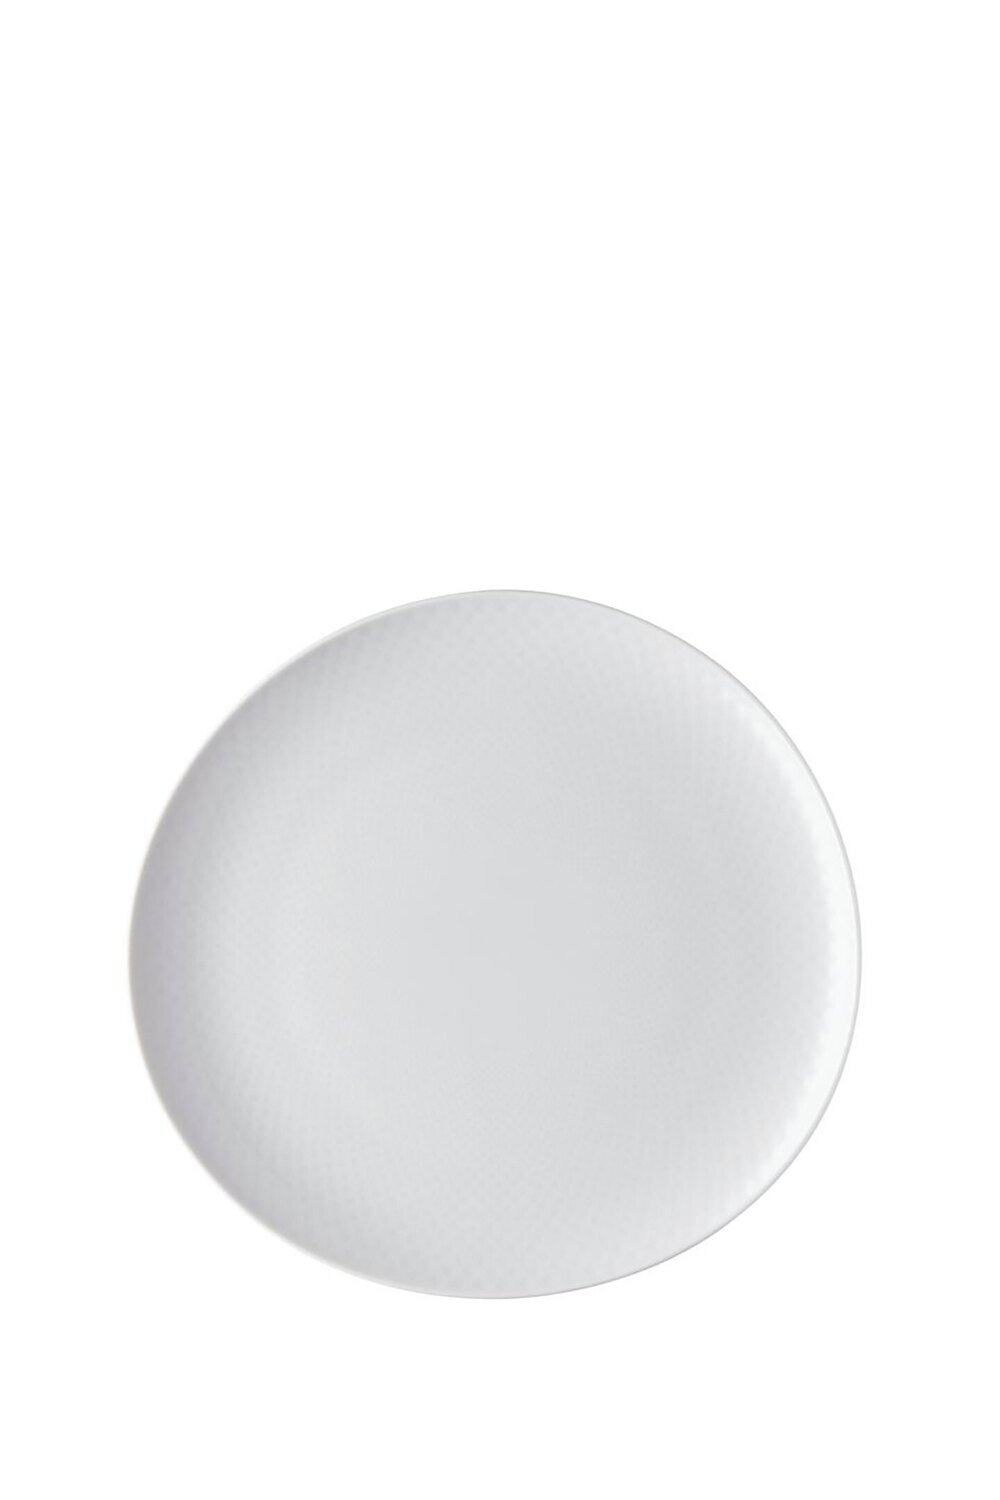 Rosenthal Junto - White Dinner Plate #2 - decoration both sides 10 1/2 Inchch